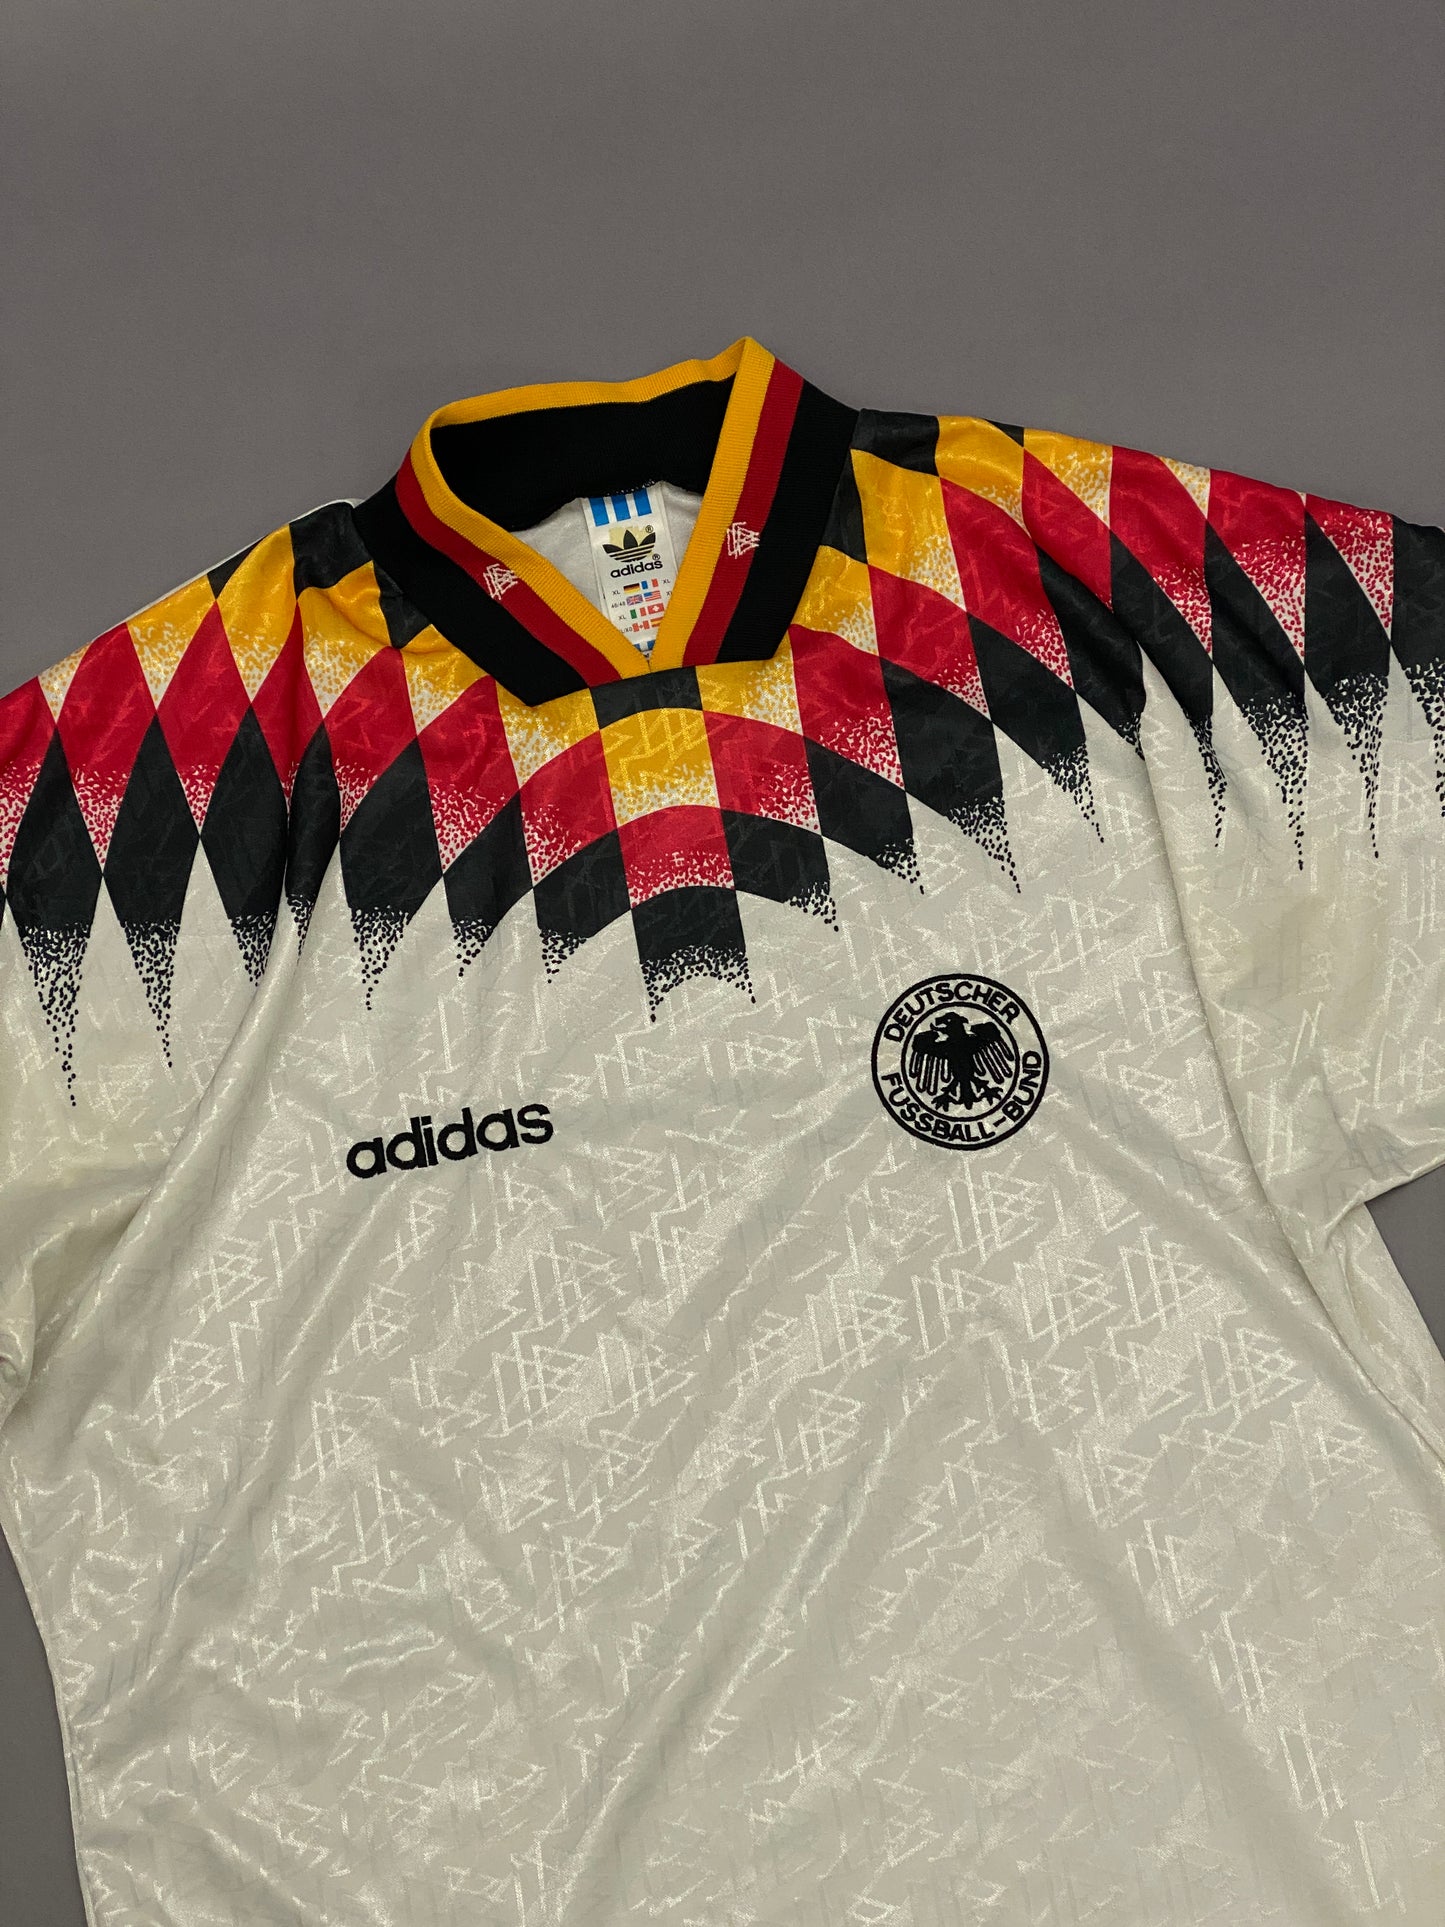 Jersey Adidas Germany 1994 Vintage